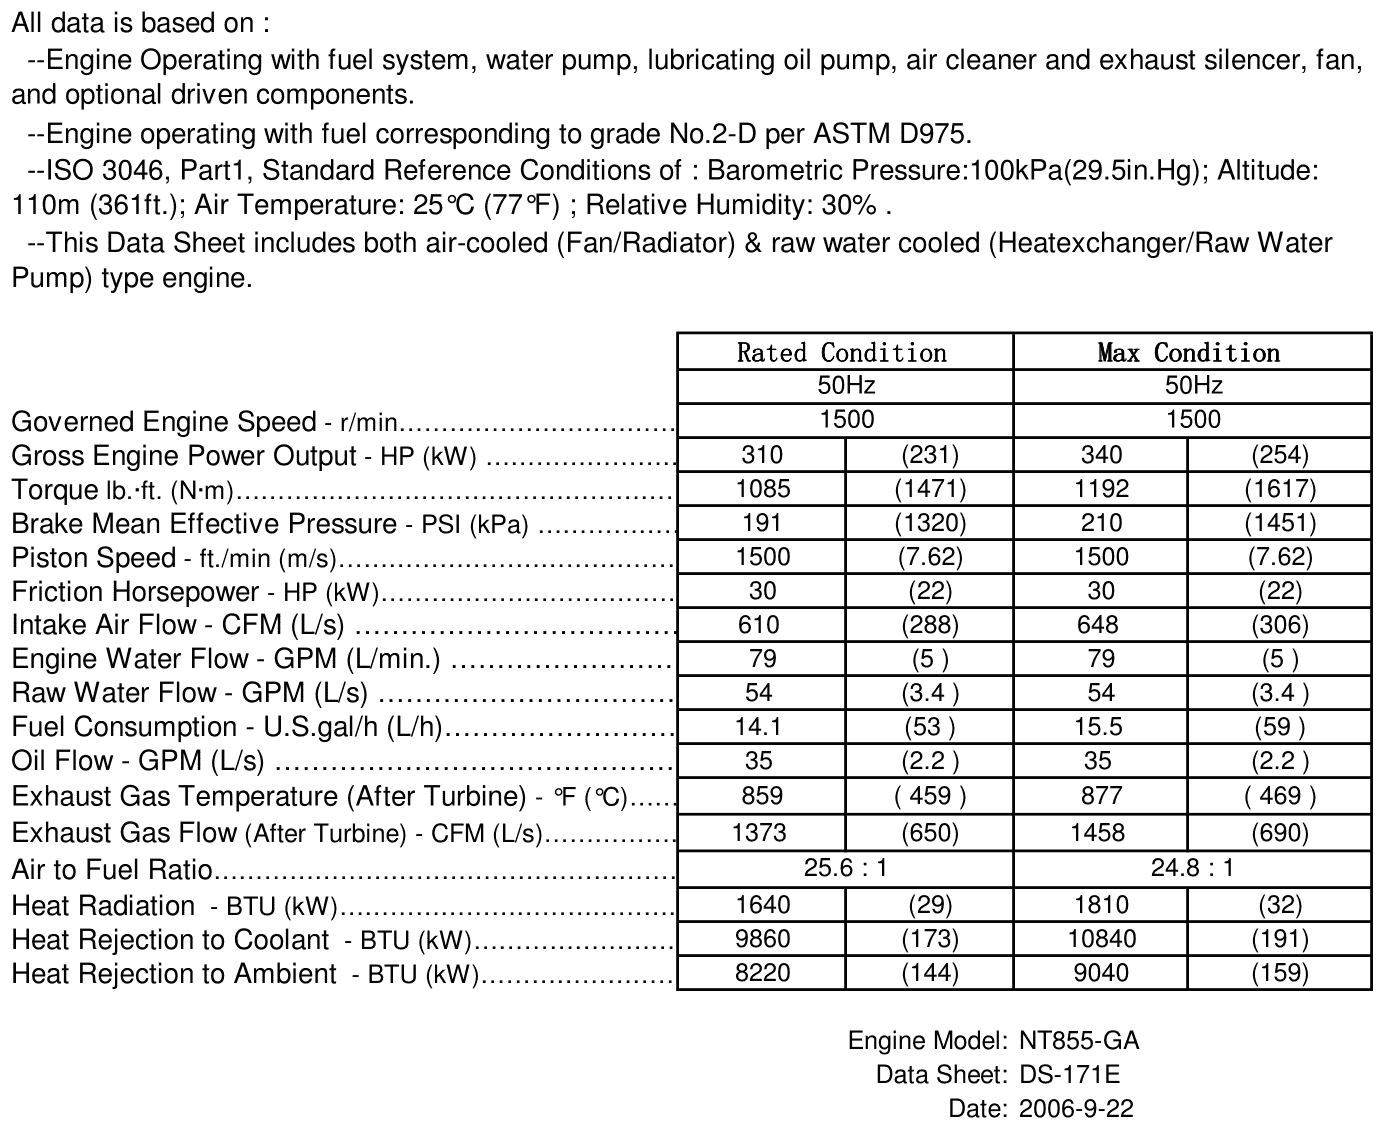 Cummins NT855-GA 231kW datasheet